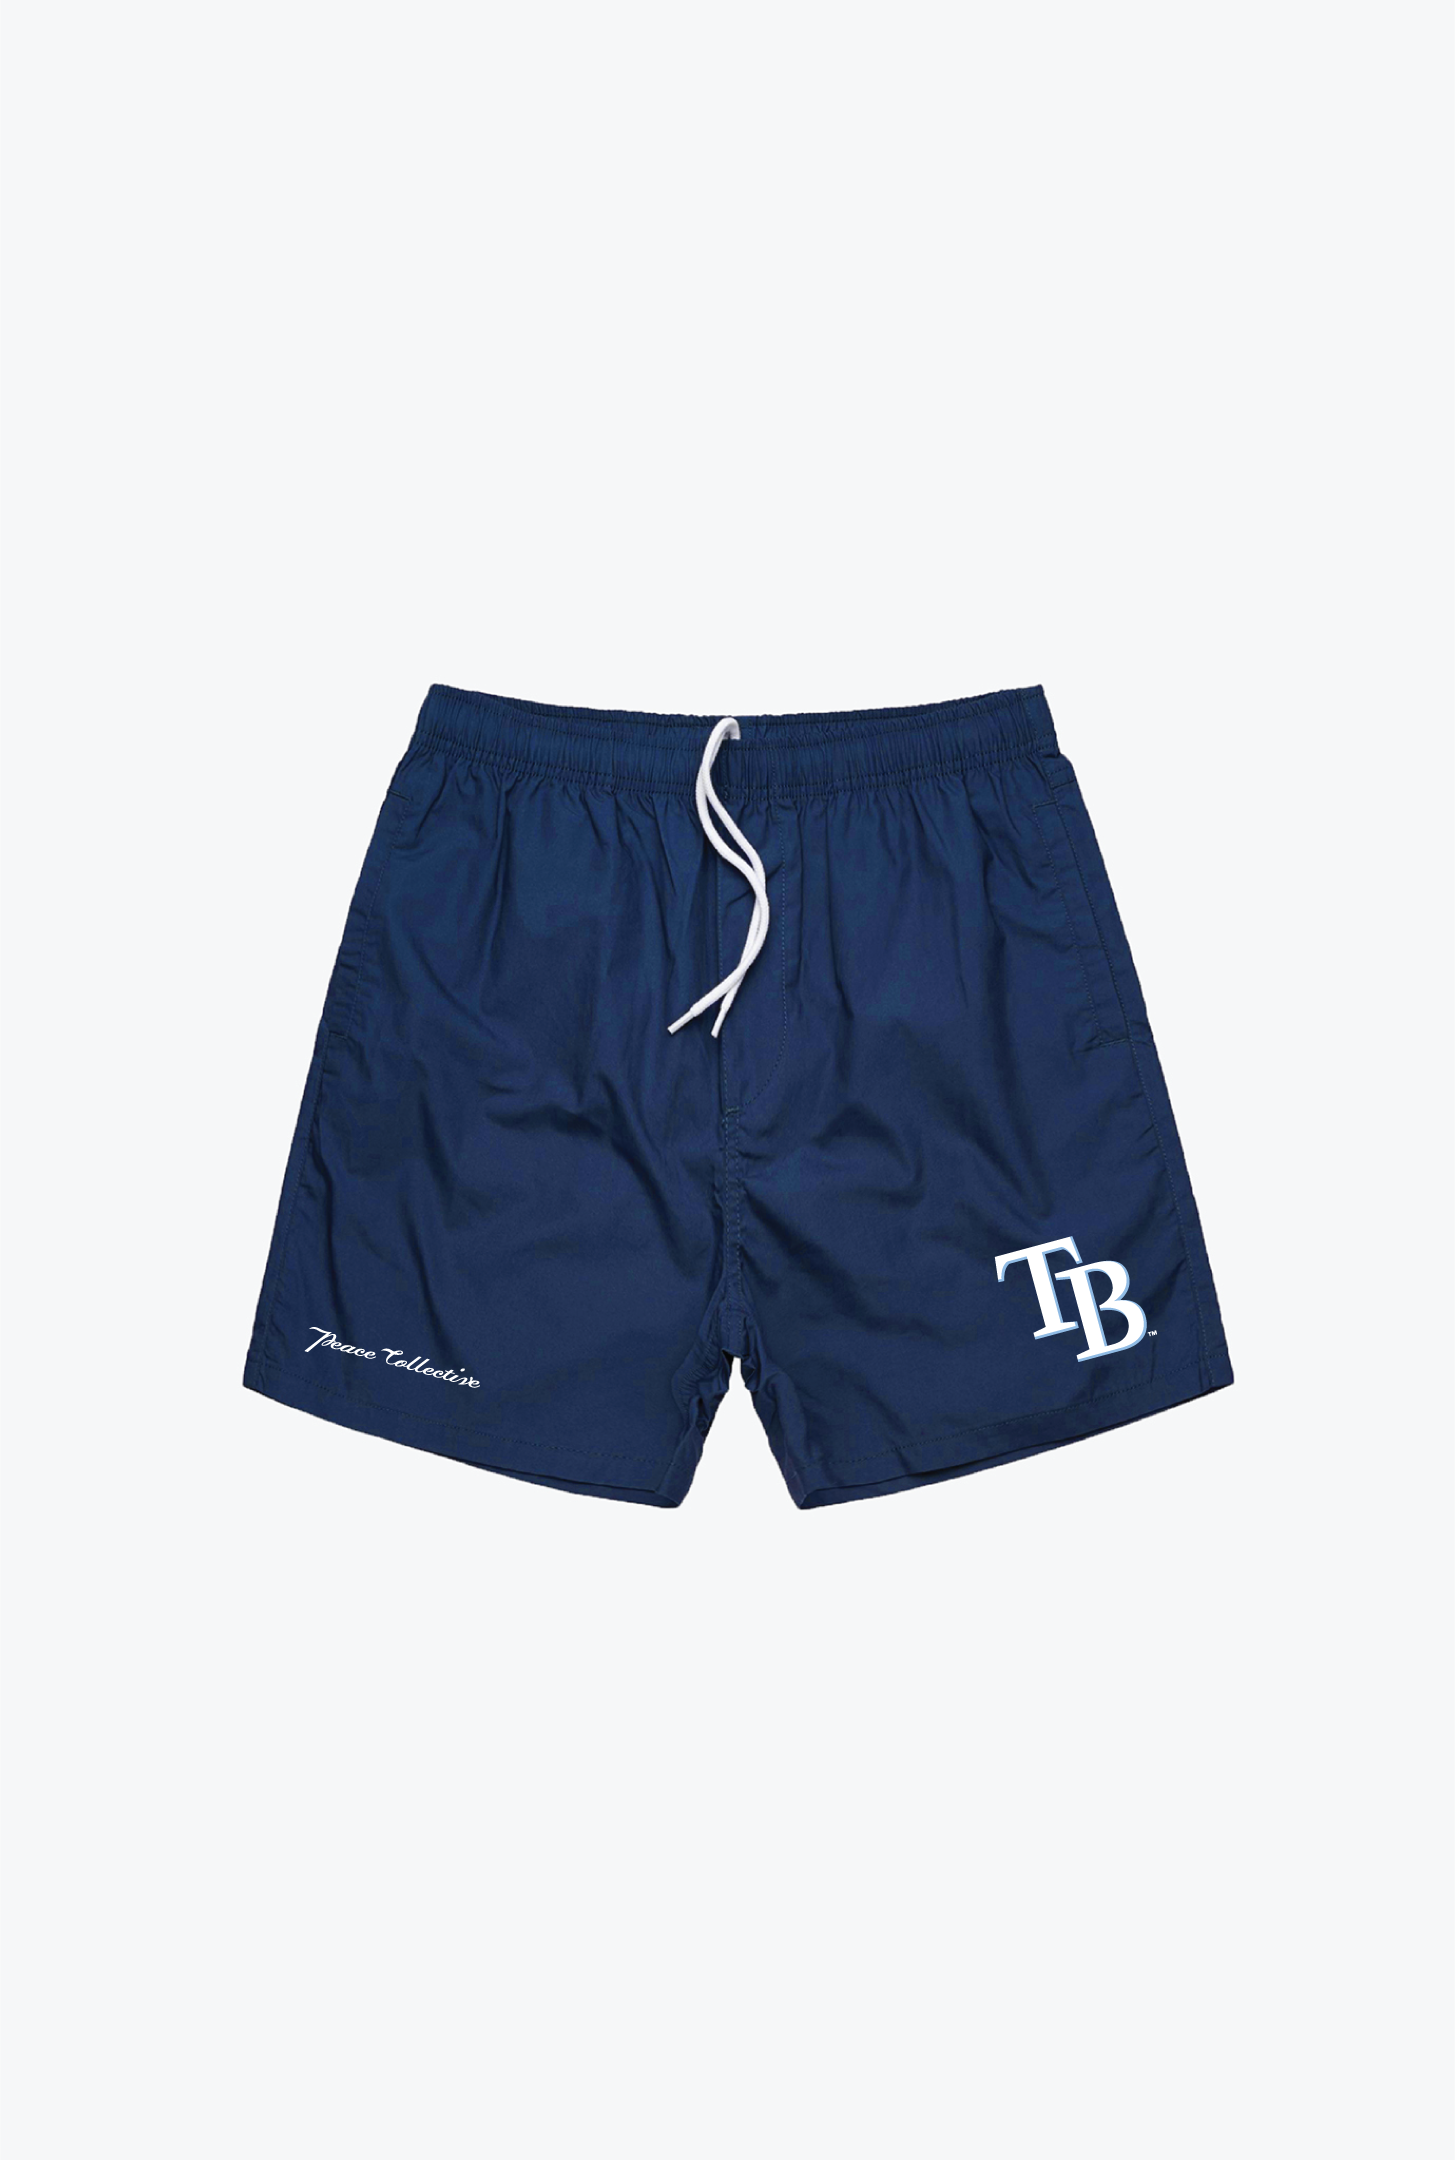 Tampa Bay Rays Board Shorts - Navy